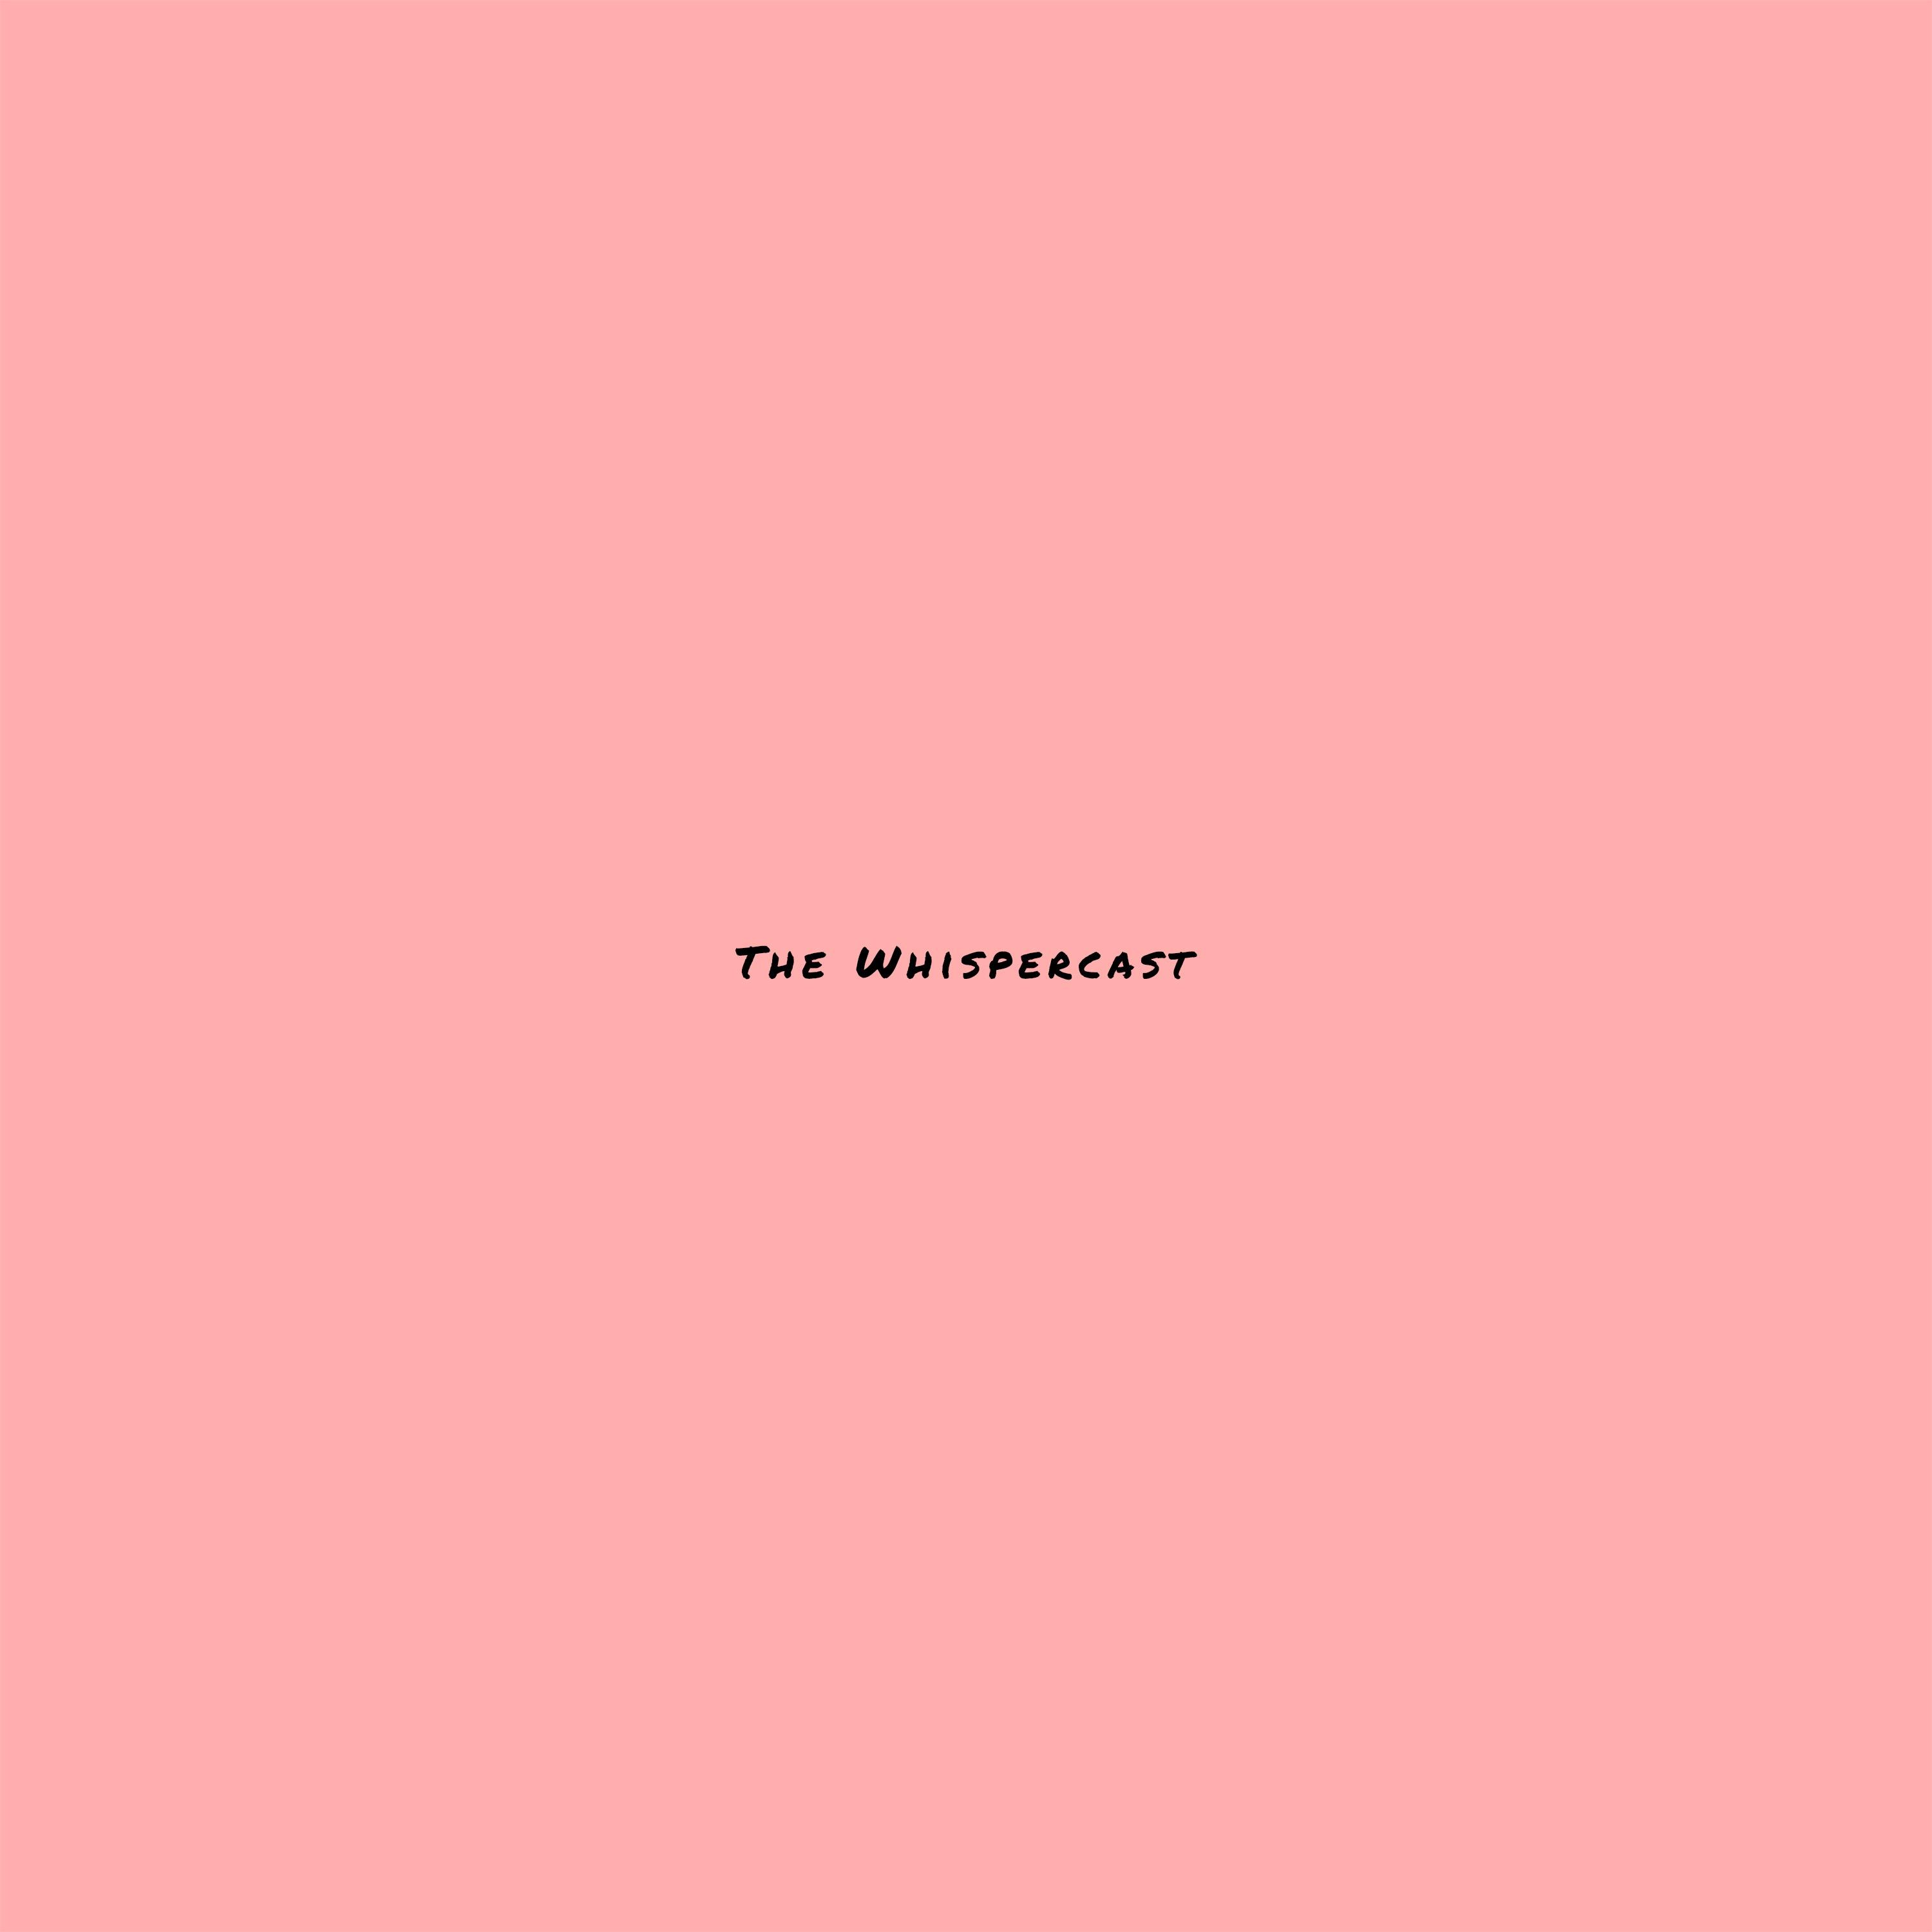 The Whispercast